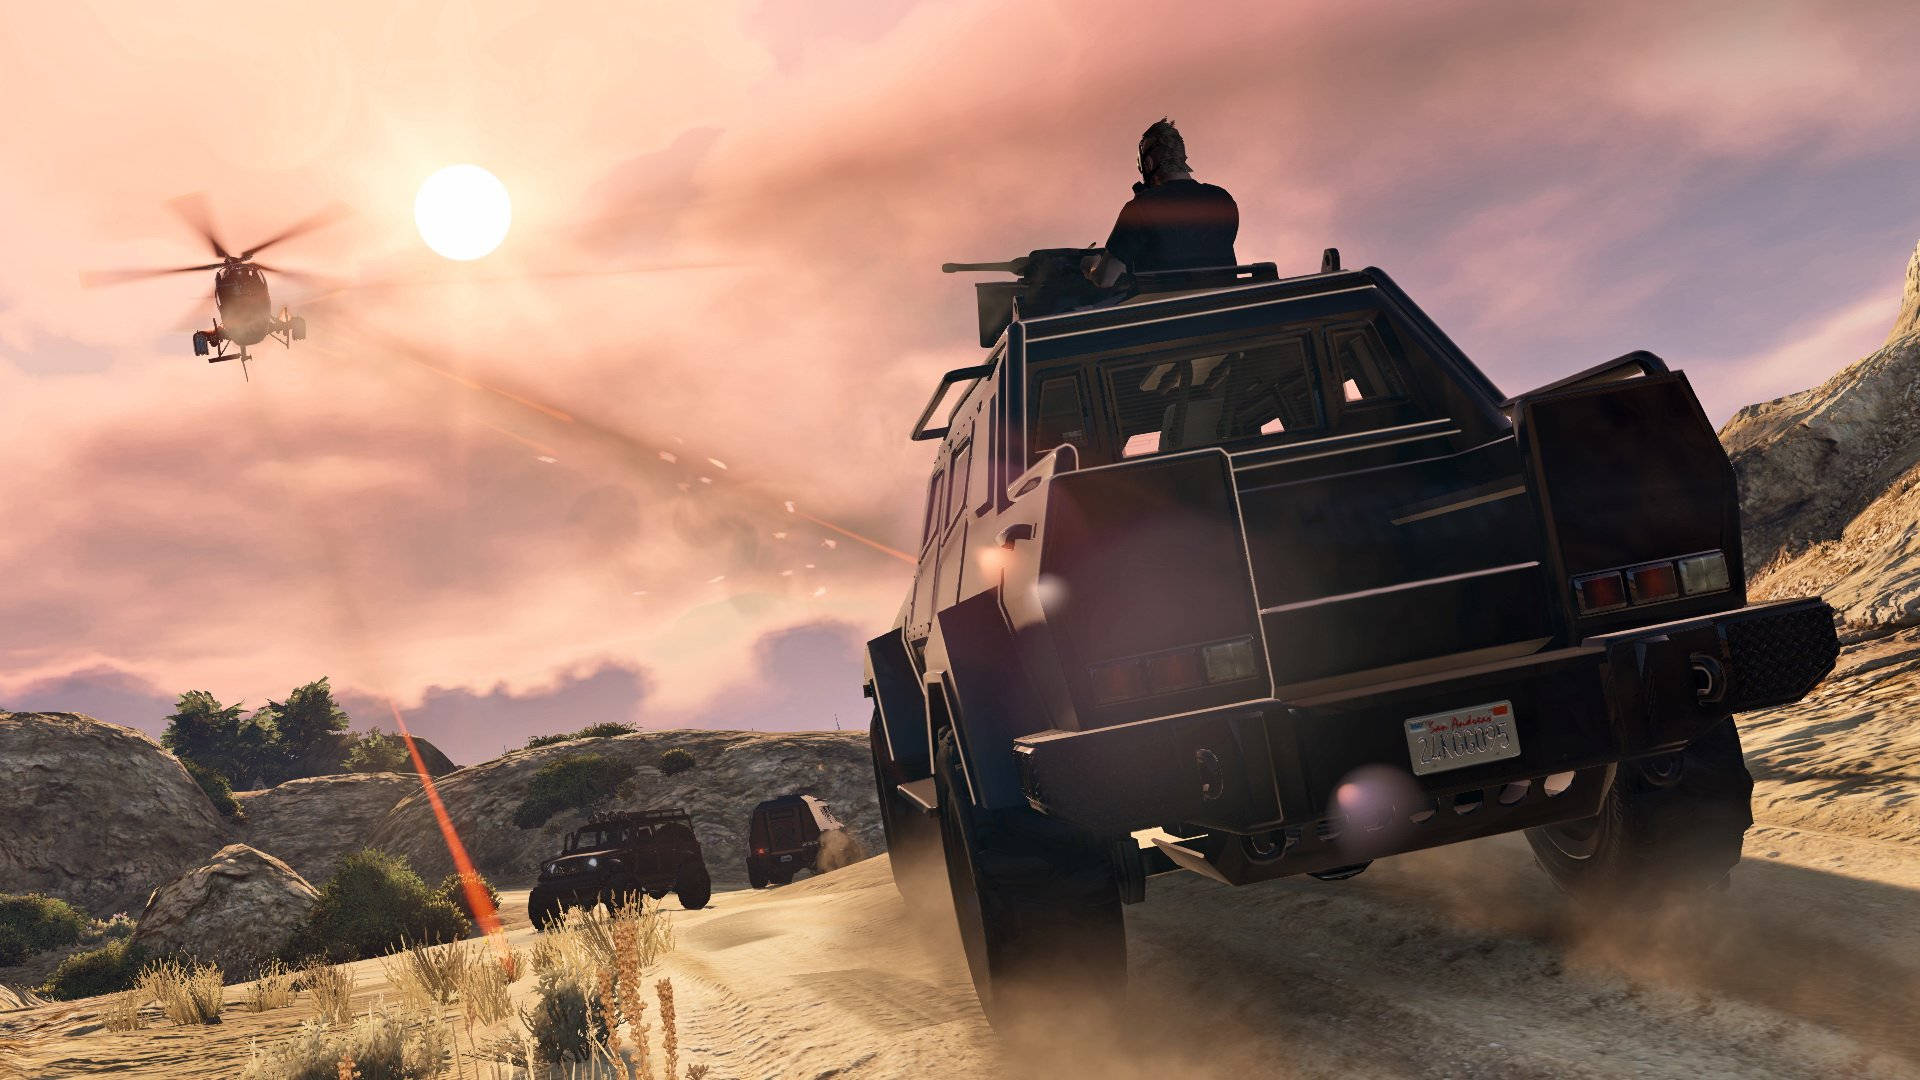 Grand Theft Auto V Suv Vs. Helicopter